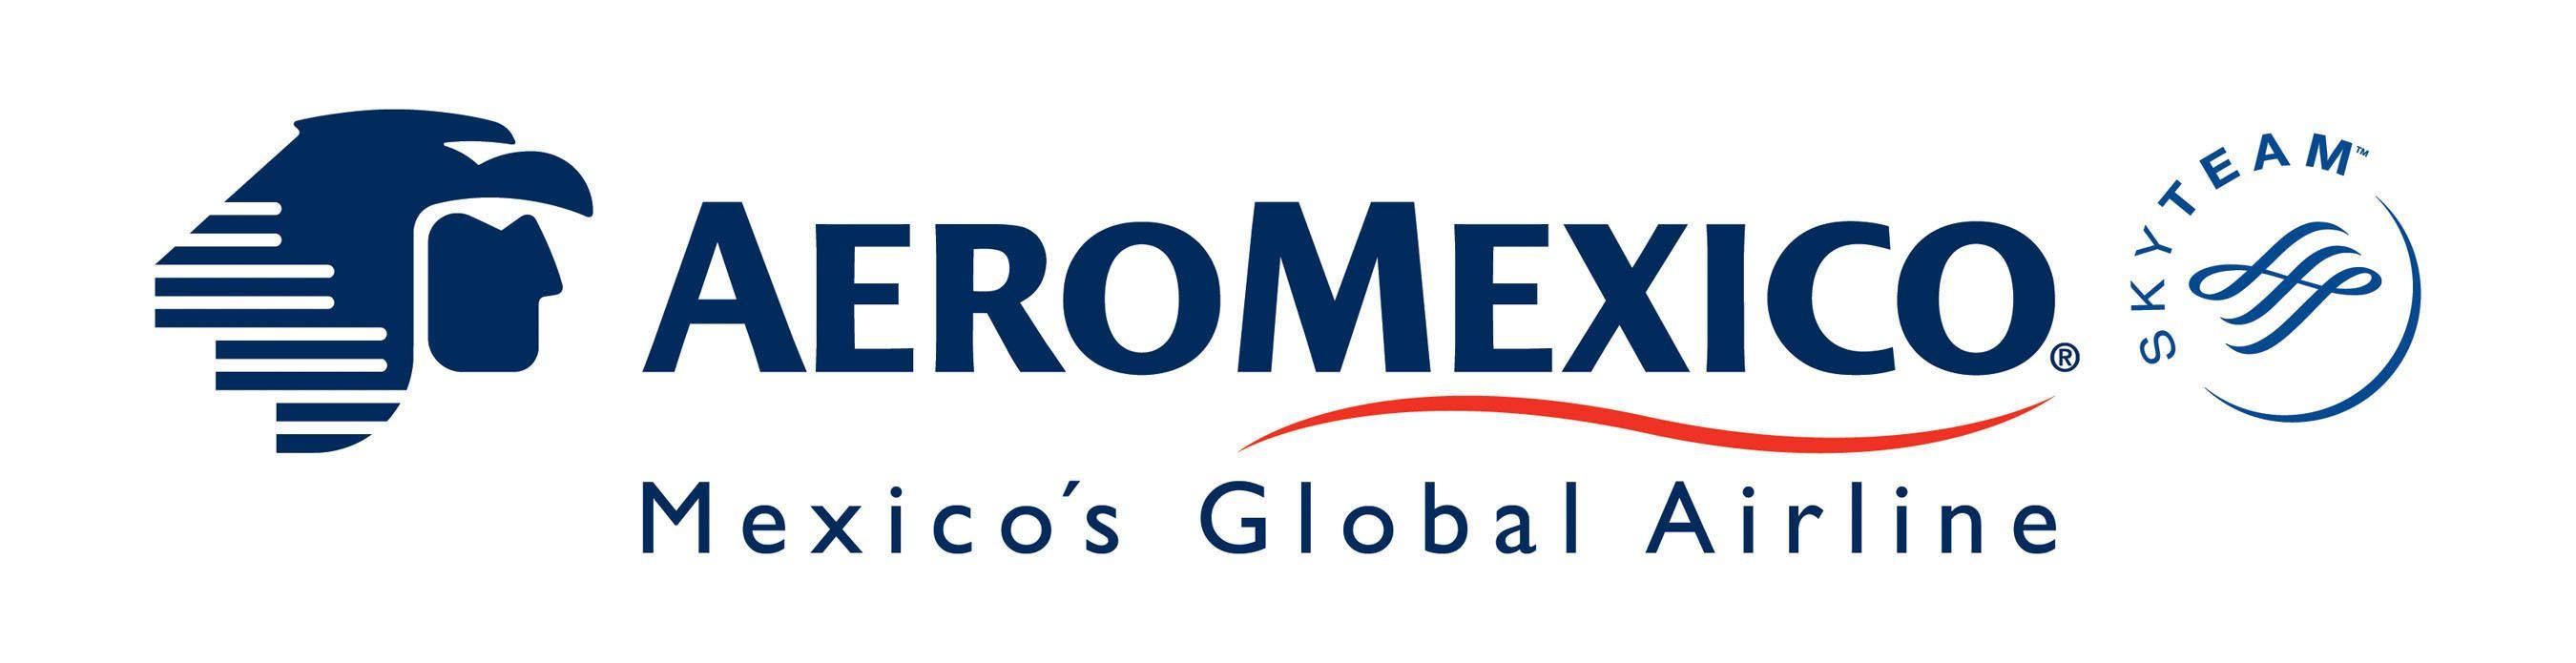 Aeromexico Logo - Aeromexico Launches New Advertising Campaign